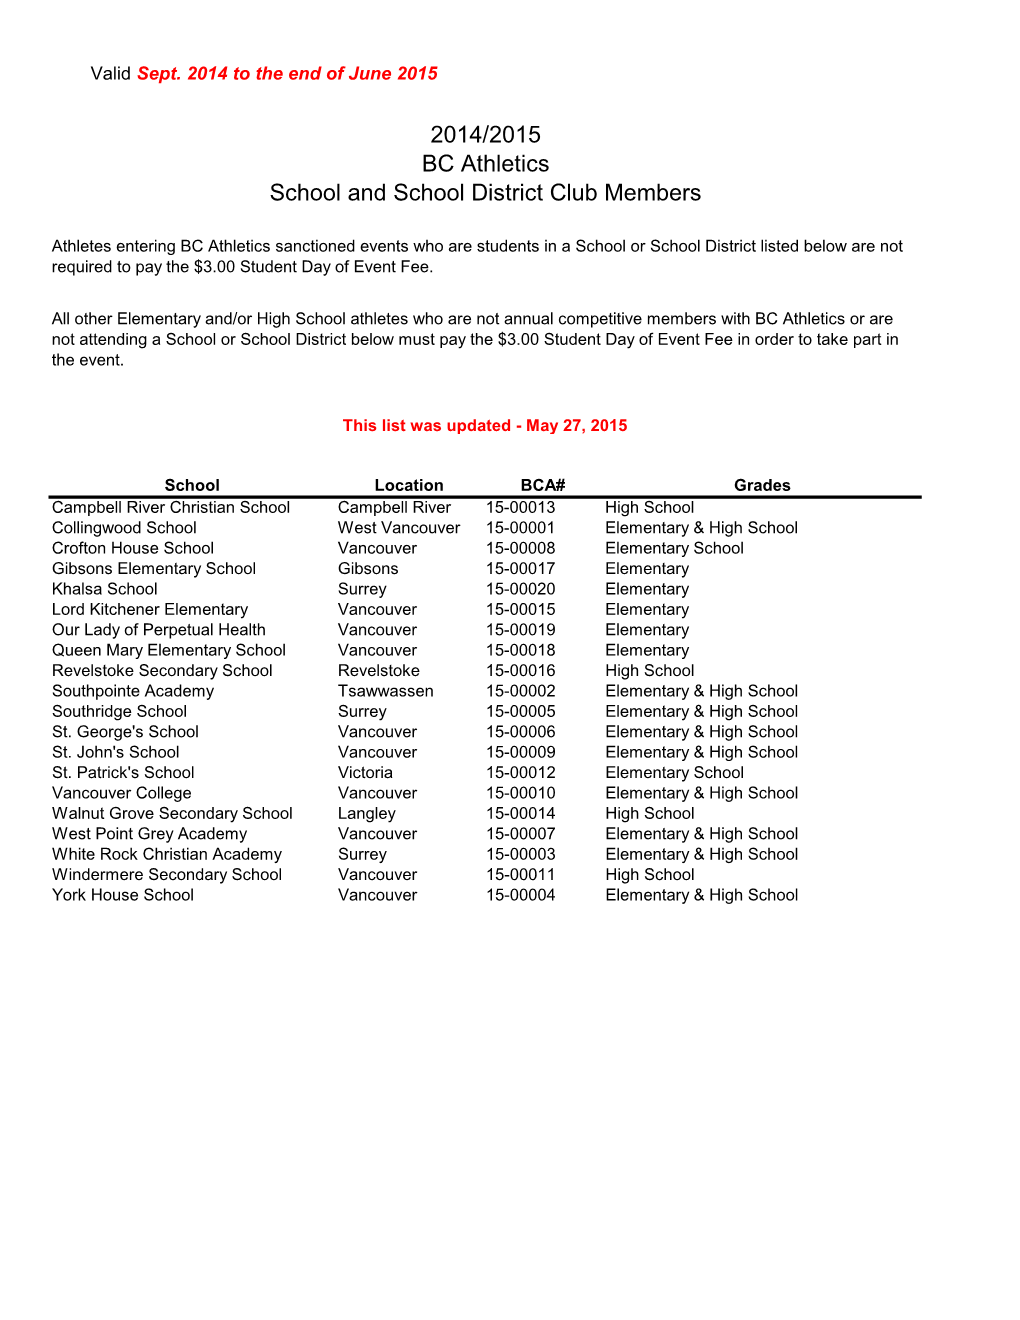 2014/2015 BC Athletics School and School District Club Members